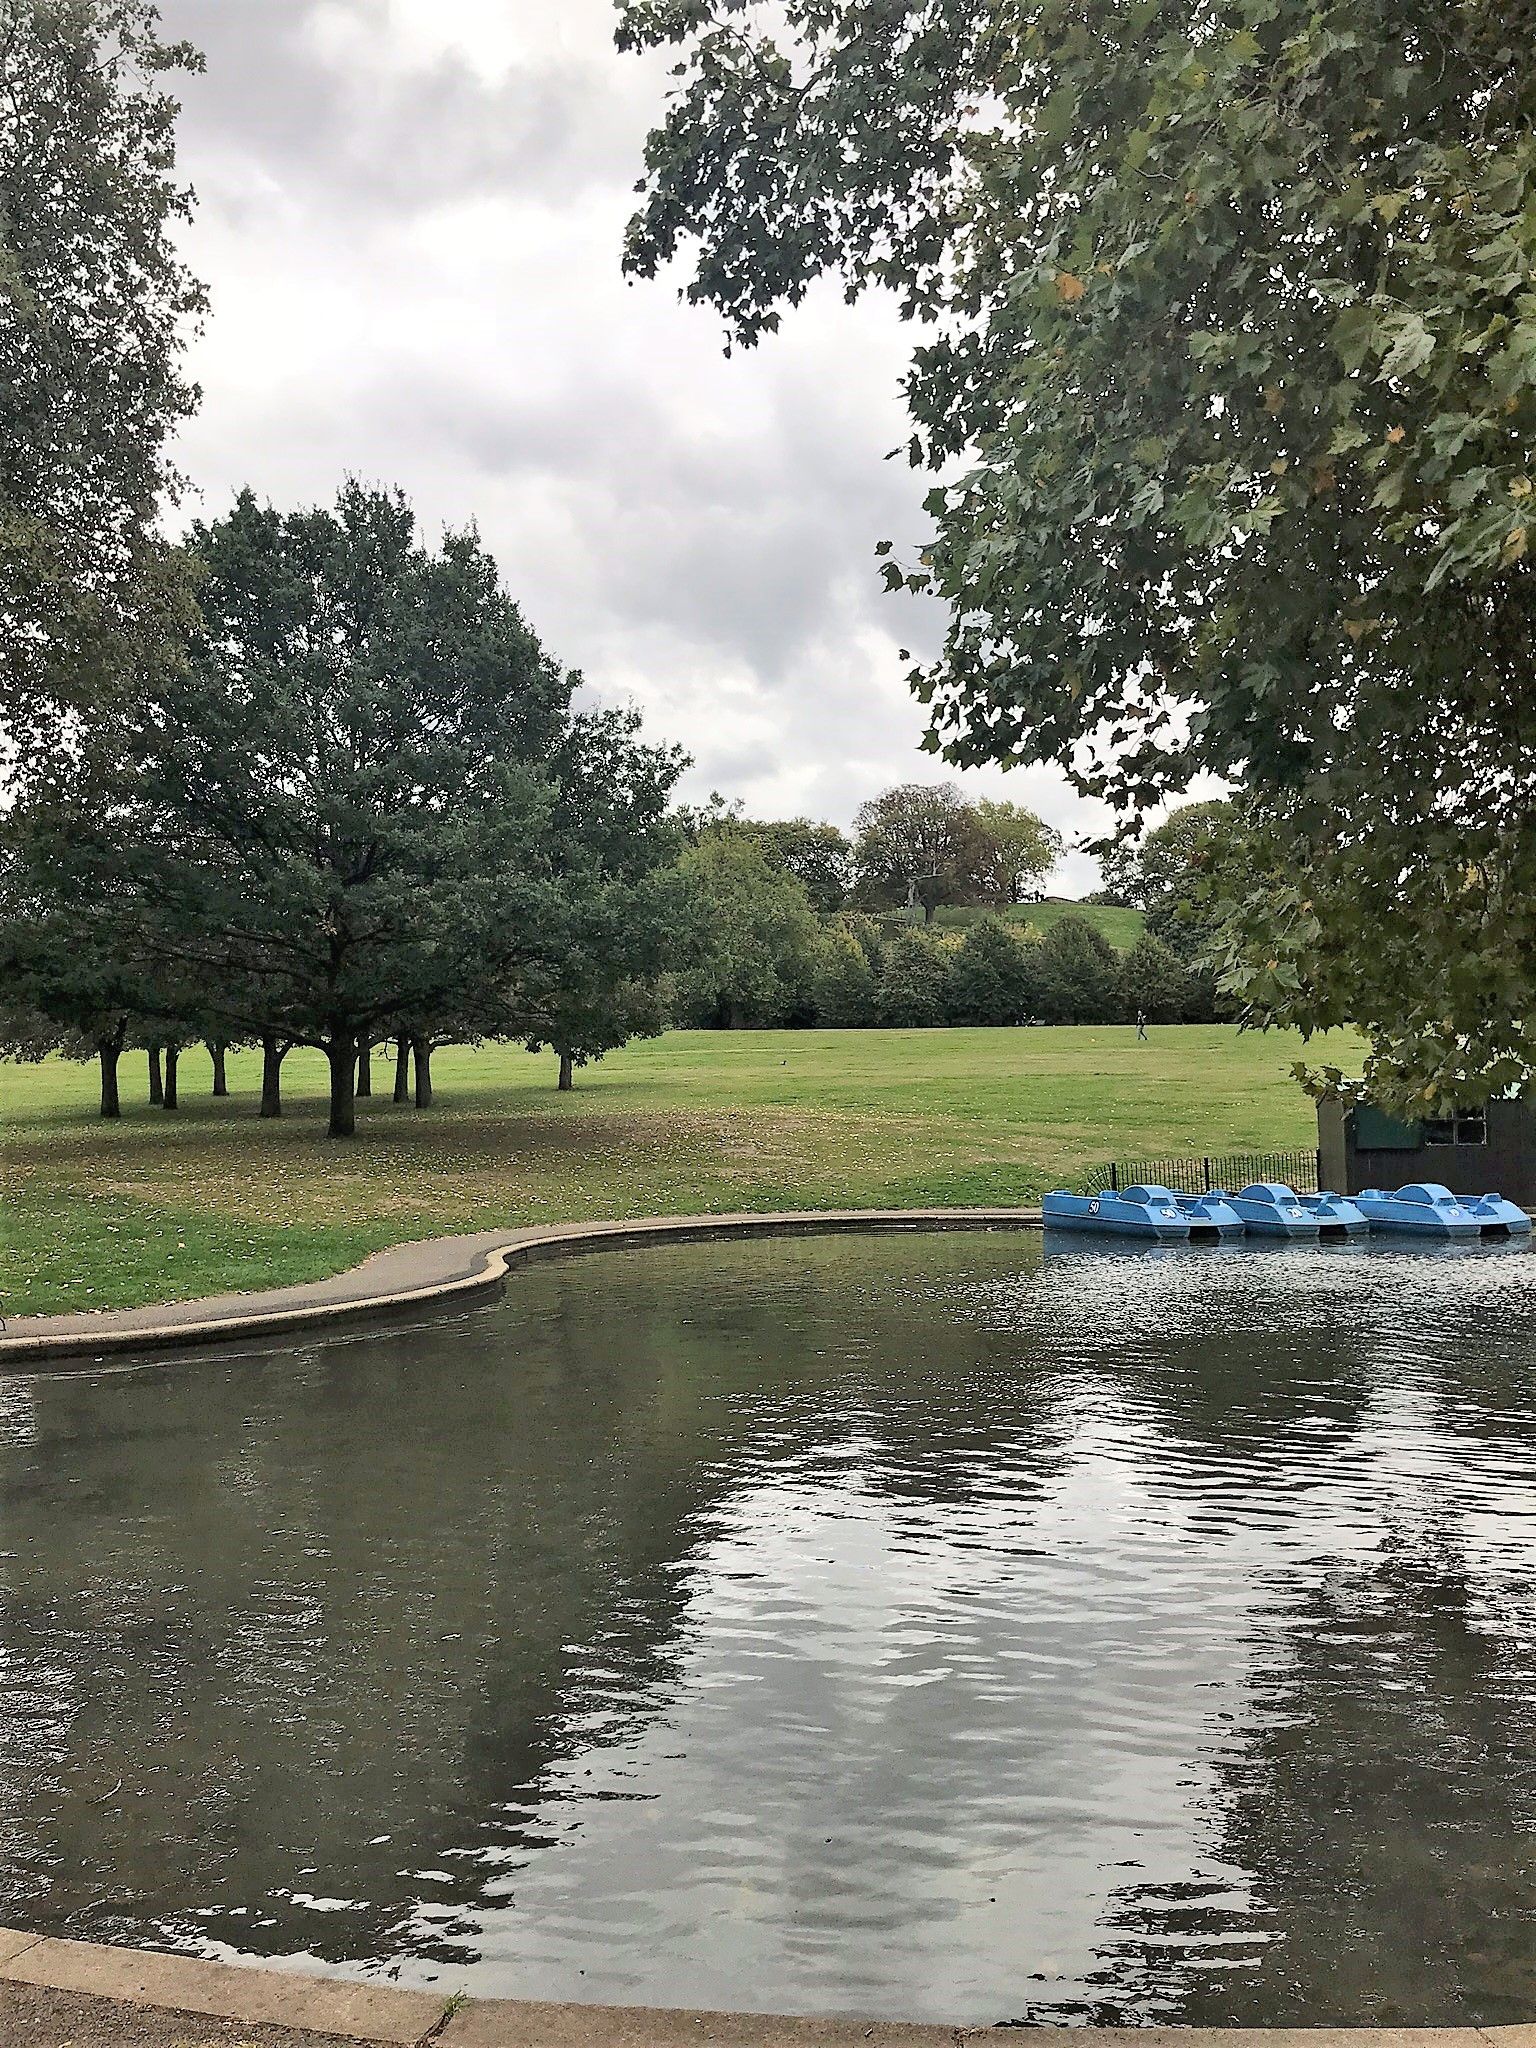 The boating lake at Greenwich Park